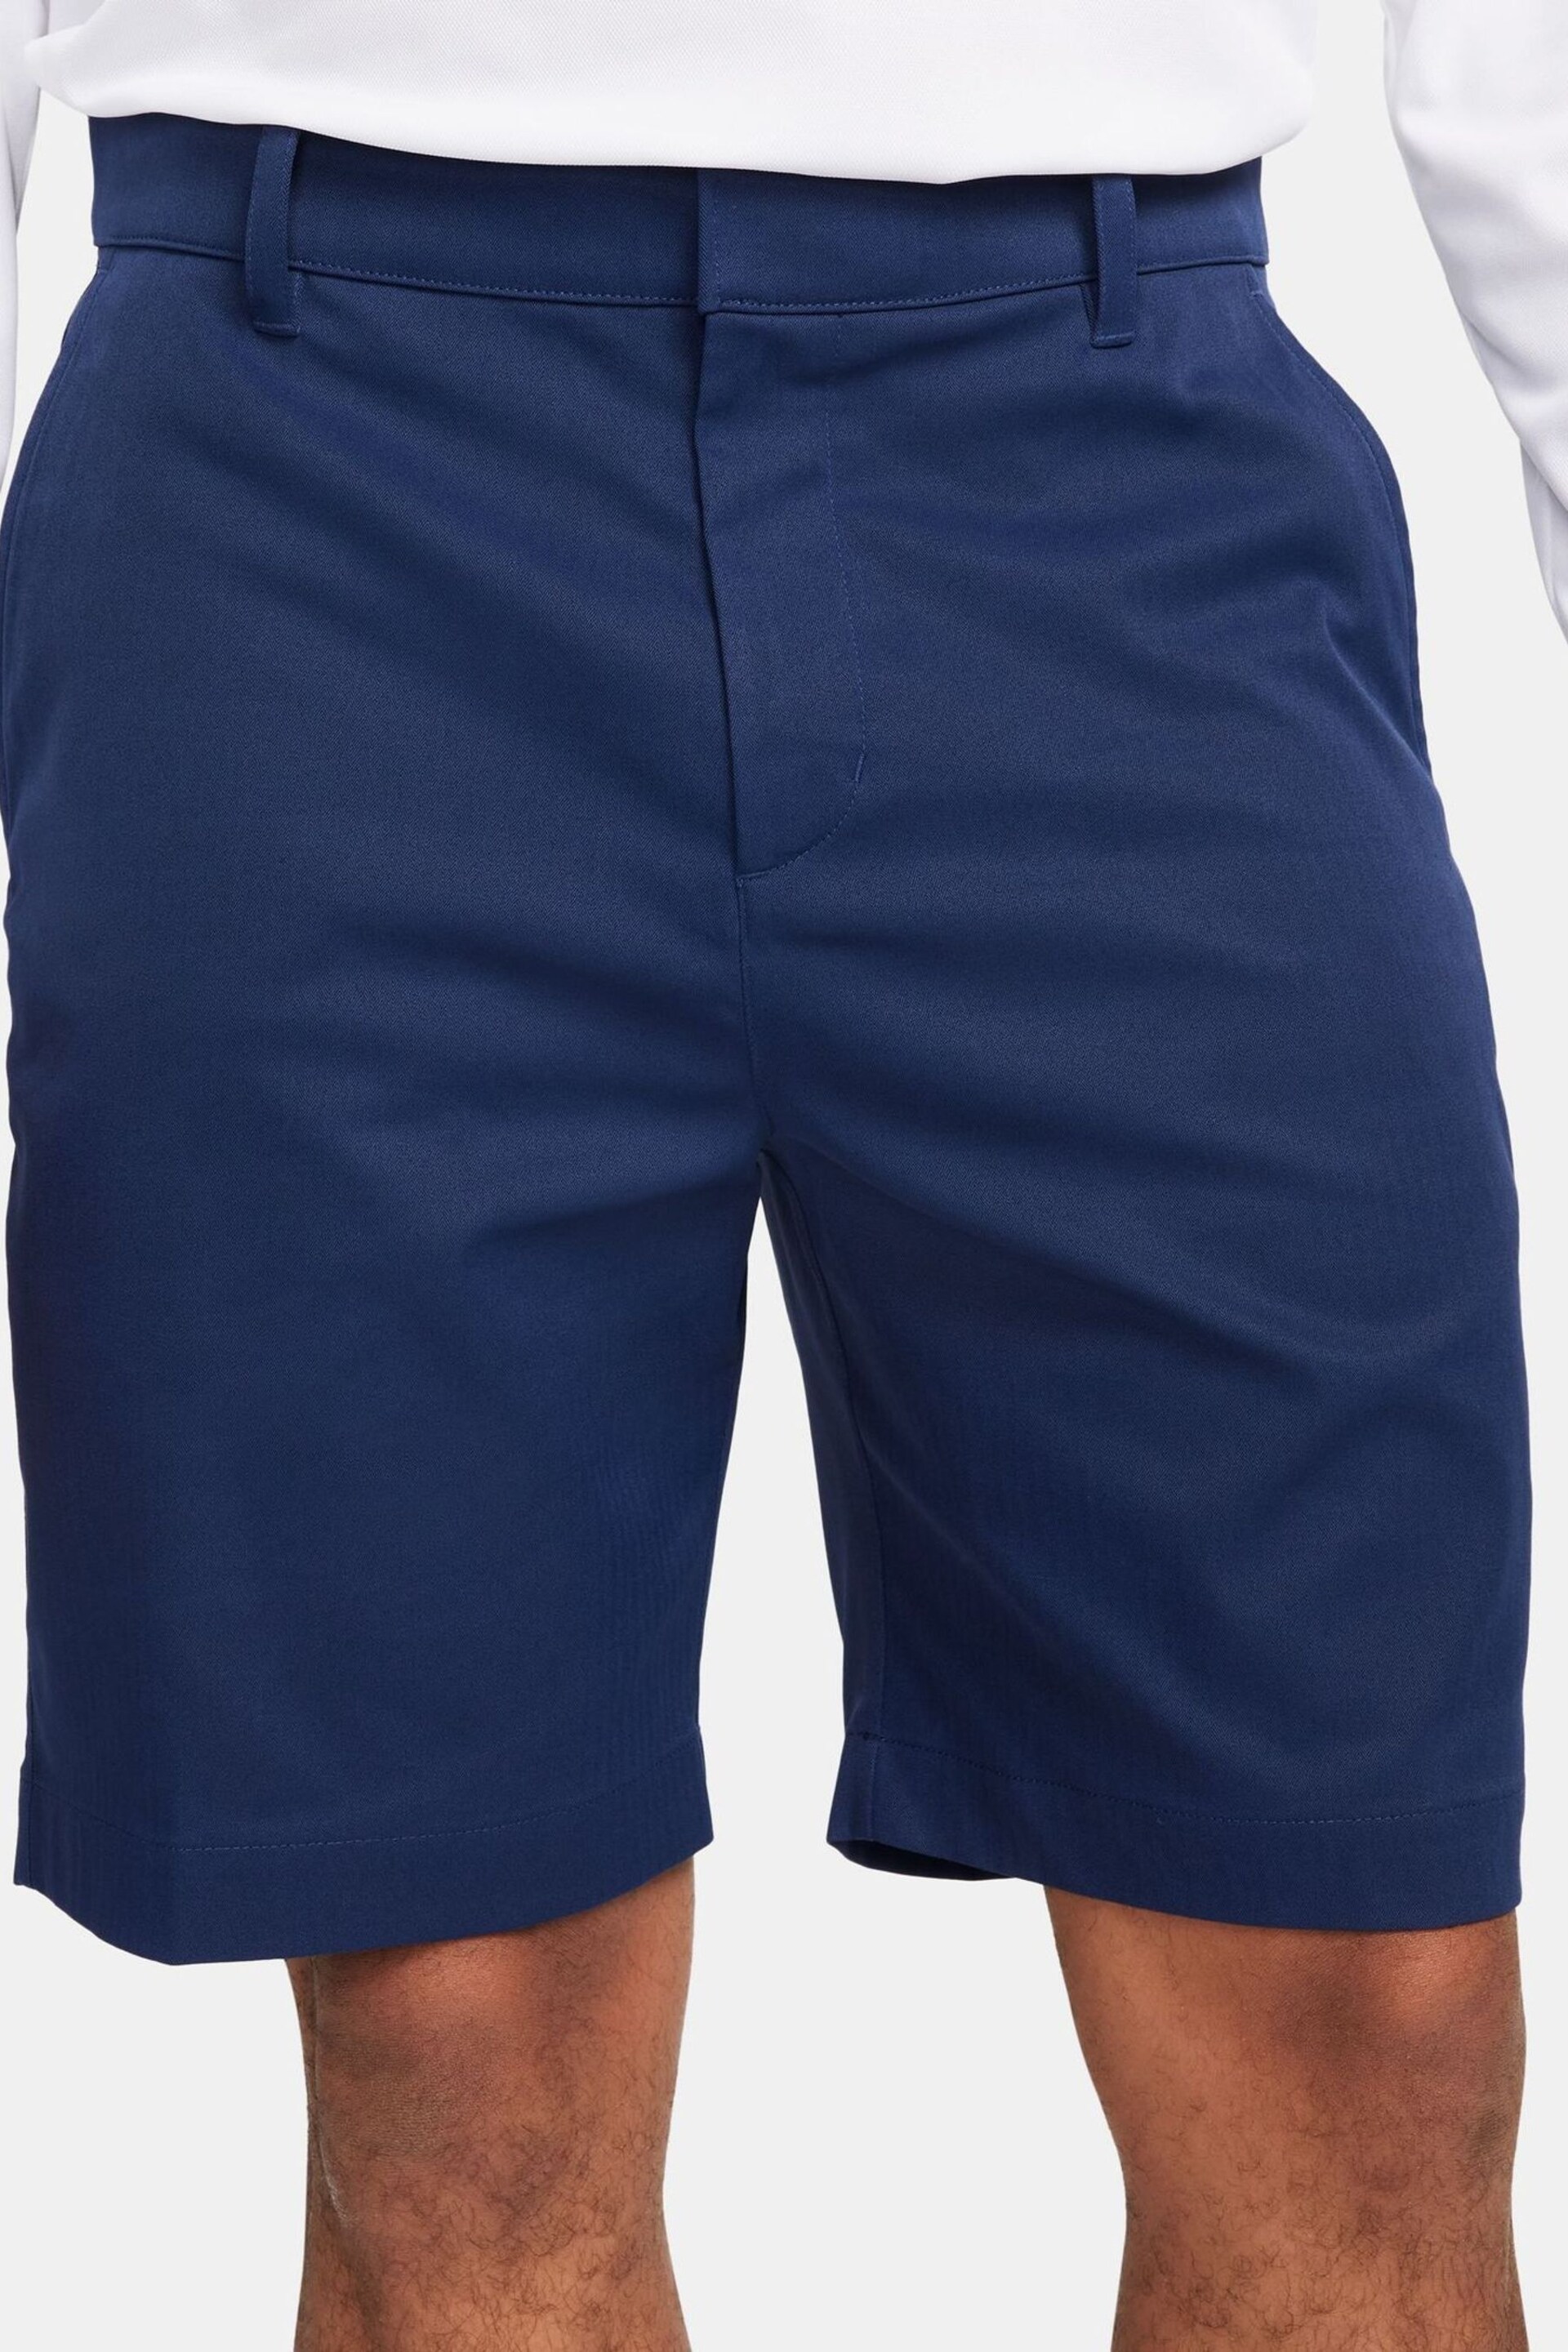 Nike Blue Tour 8 inch Chino Golf Shorts - Image 2 of 9